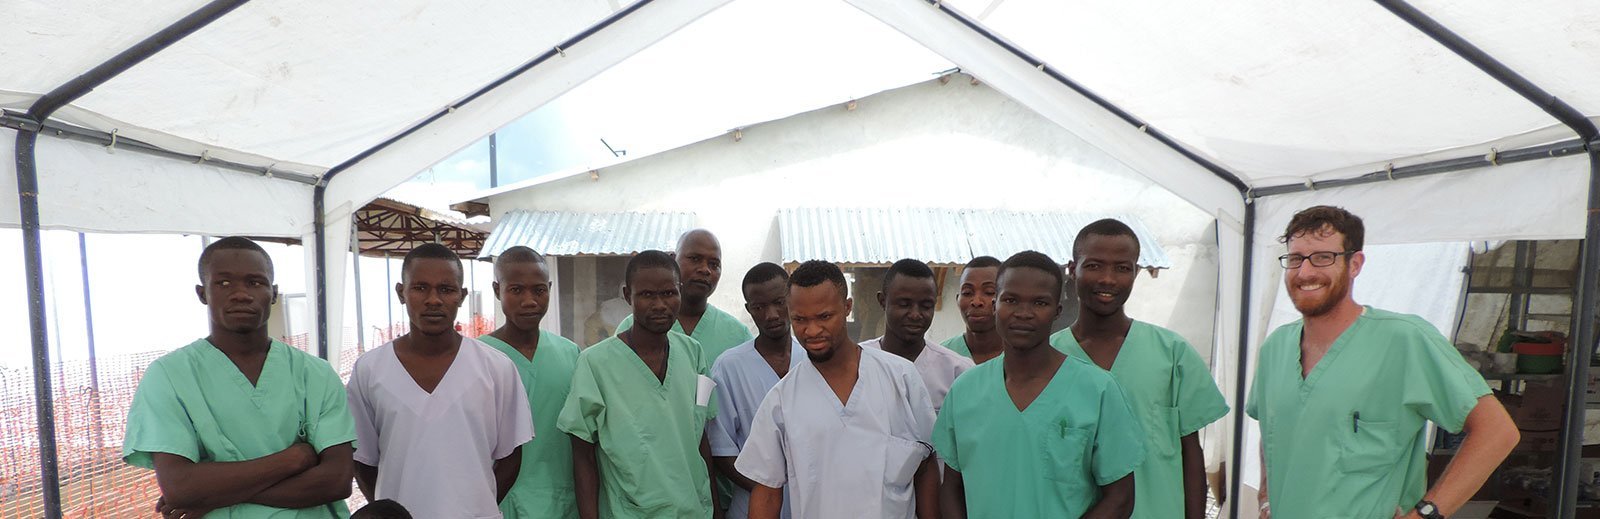 Water and sanitation team (Schreiner, far right) in Ebola Management Center (EMC) in Bo, Sierra Leone.